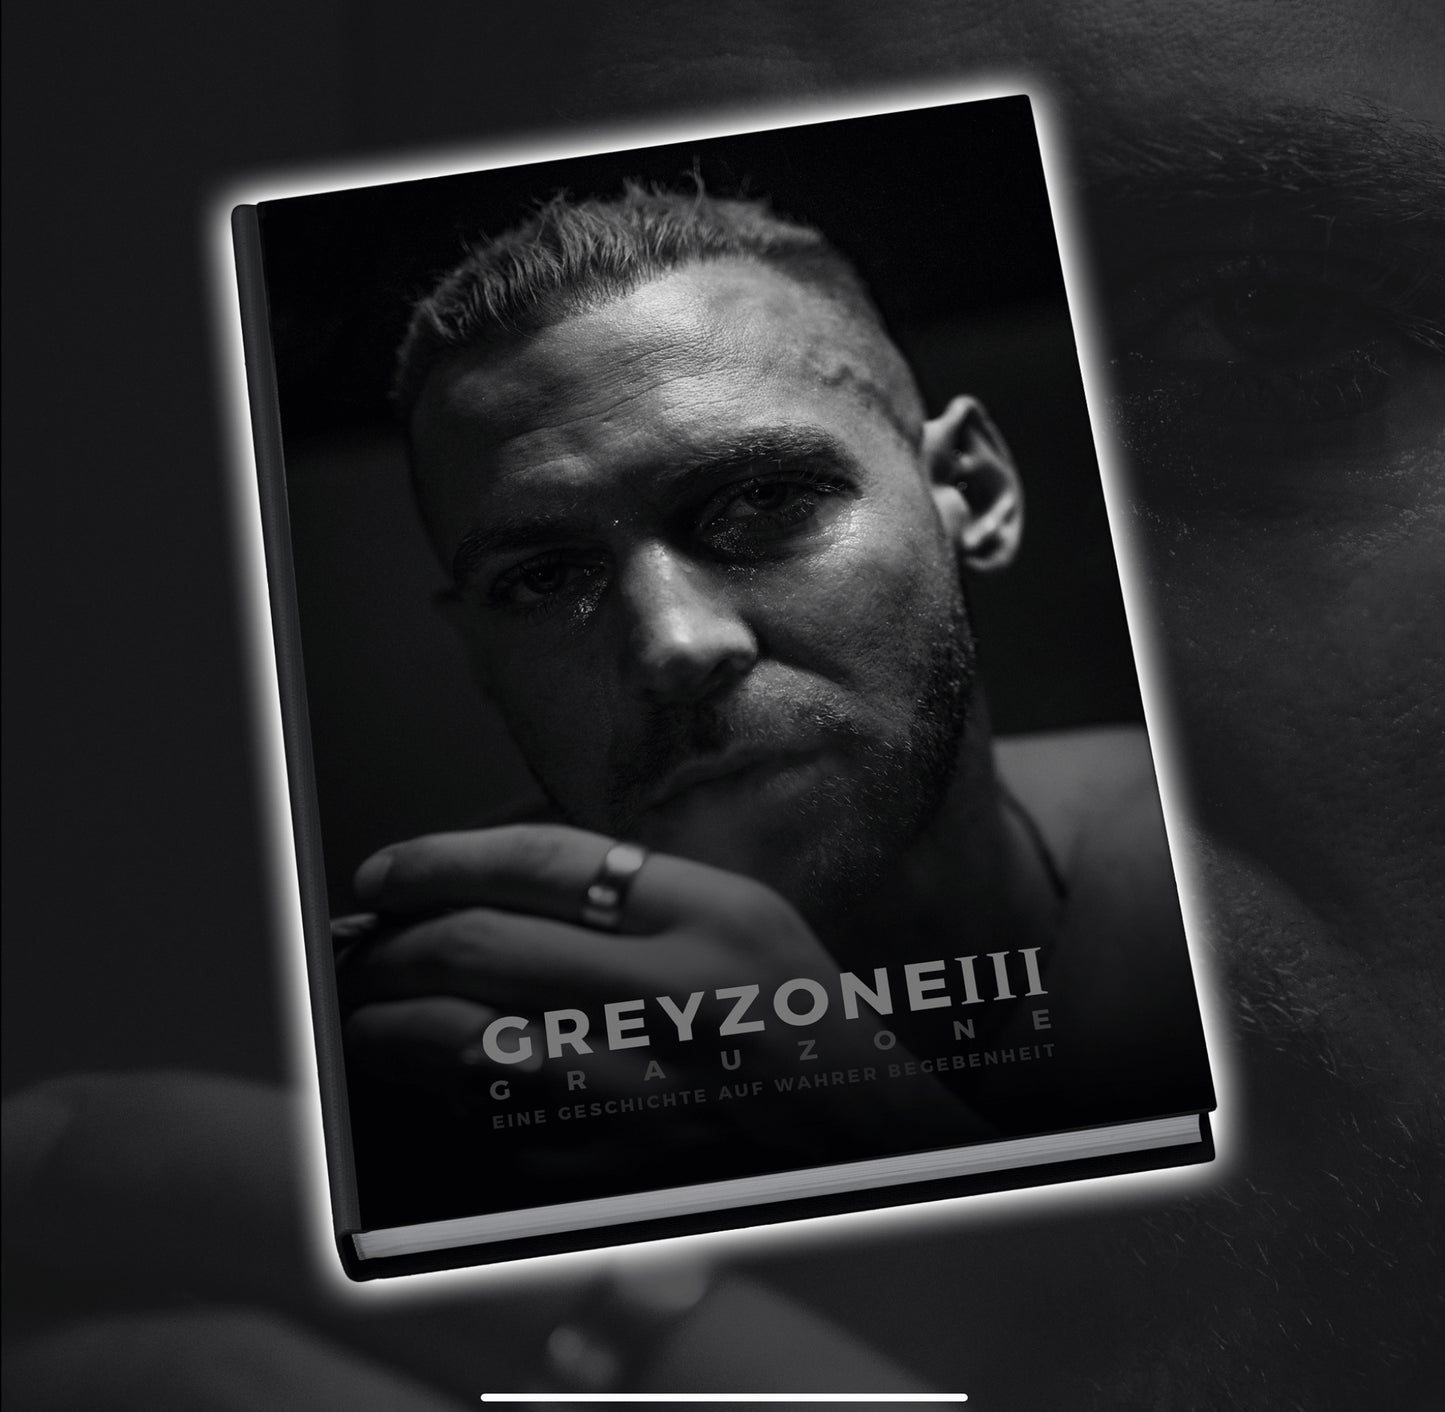 Greyzone III - Buch (Single) Vorbestellung